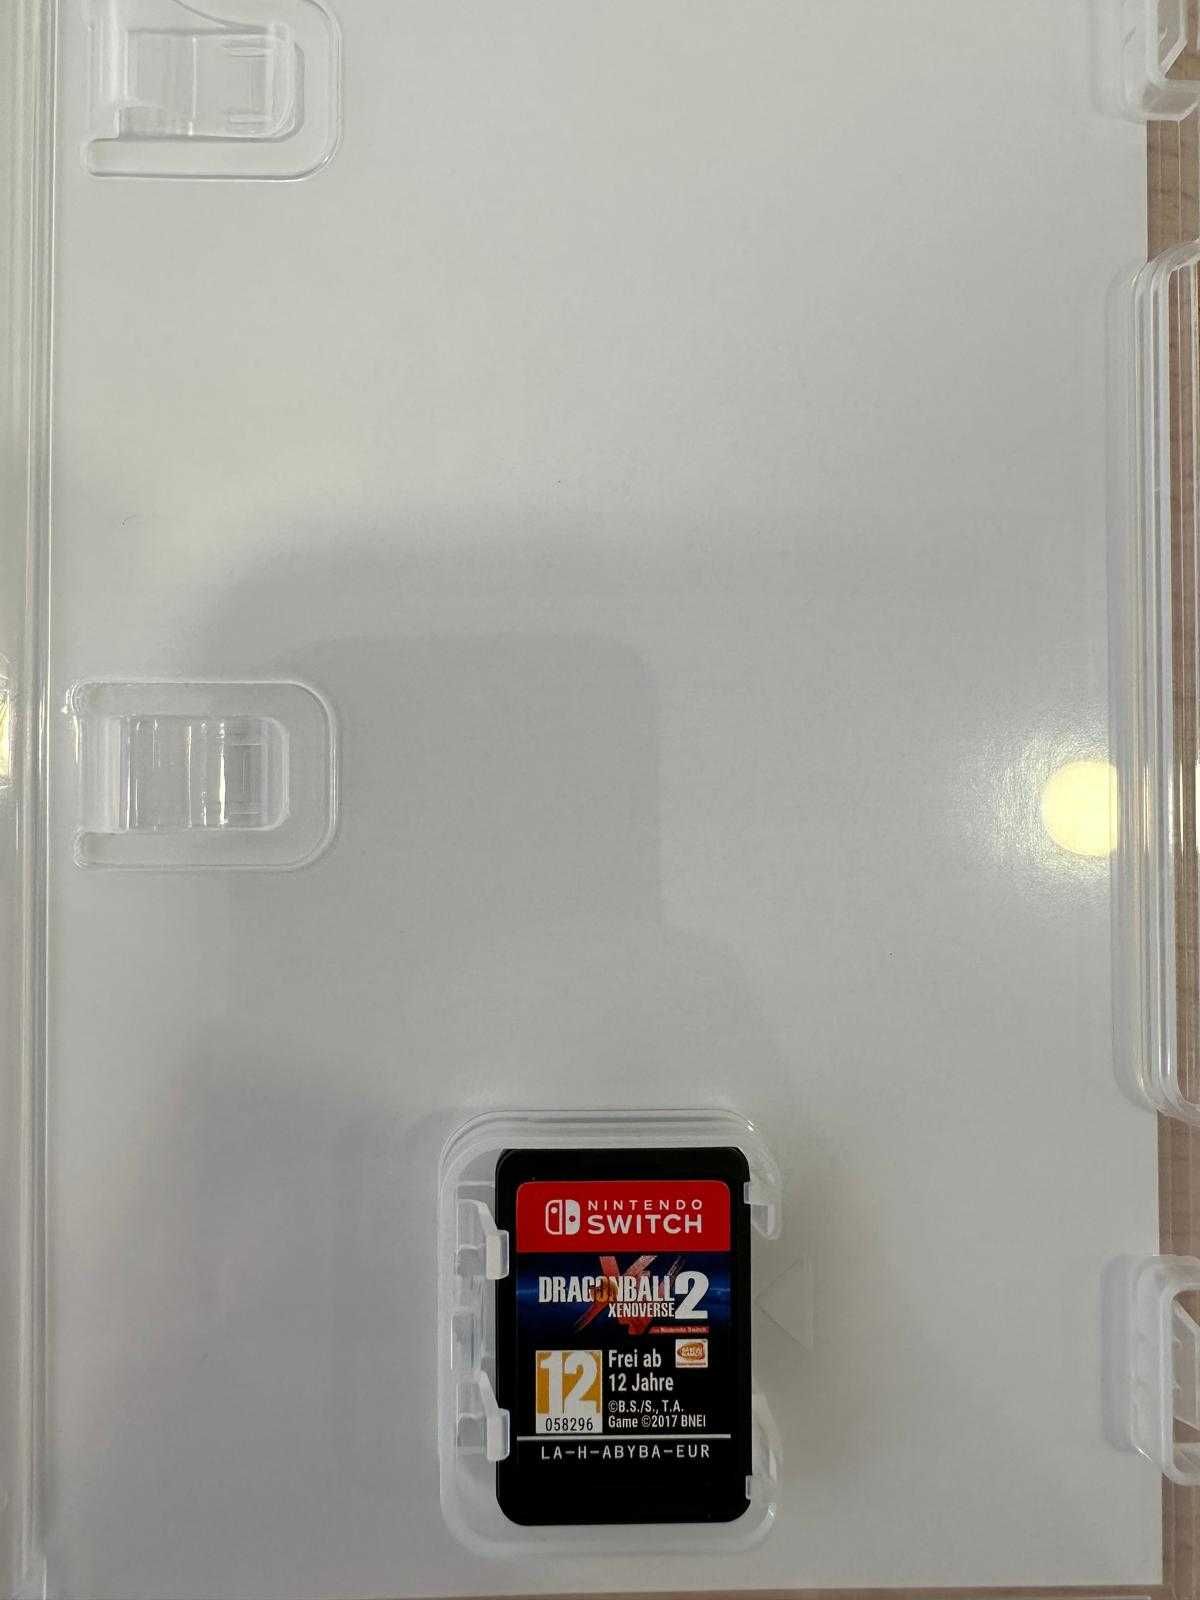 Vendo/troco jogos Nintendo Switch (Nier automata, DBZ Xenoverse 2)